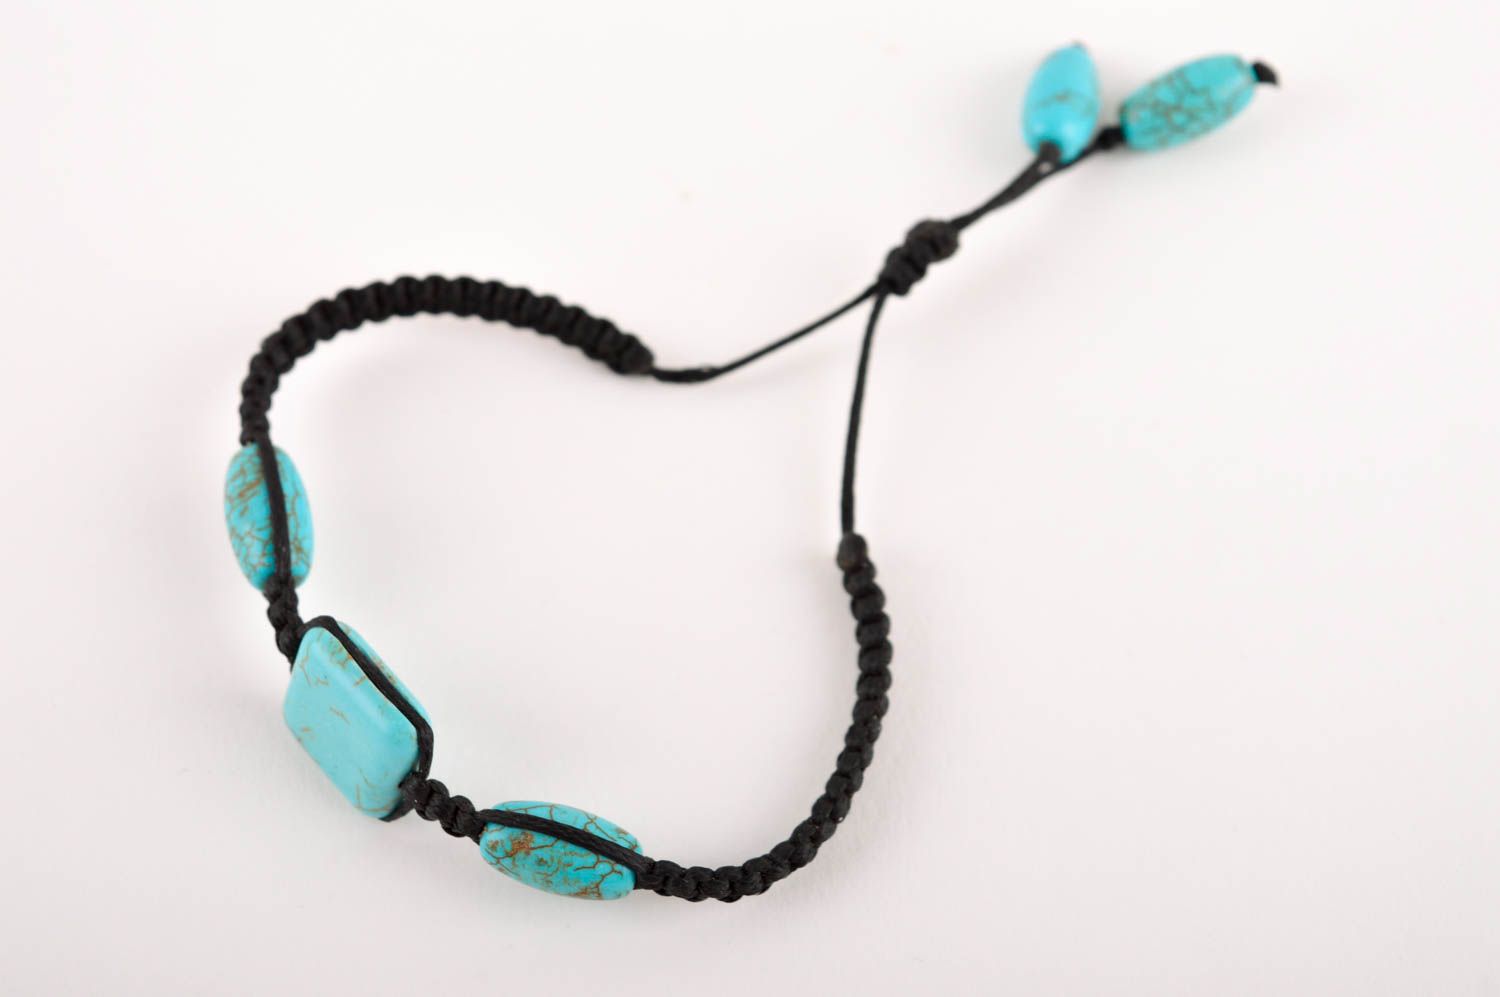 Unusual handmade macrame bracelet gemstone bracelet designs gifts for her photo 2